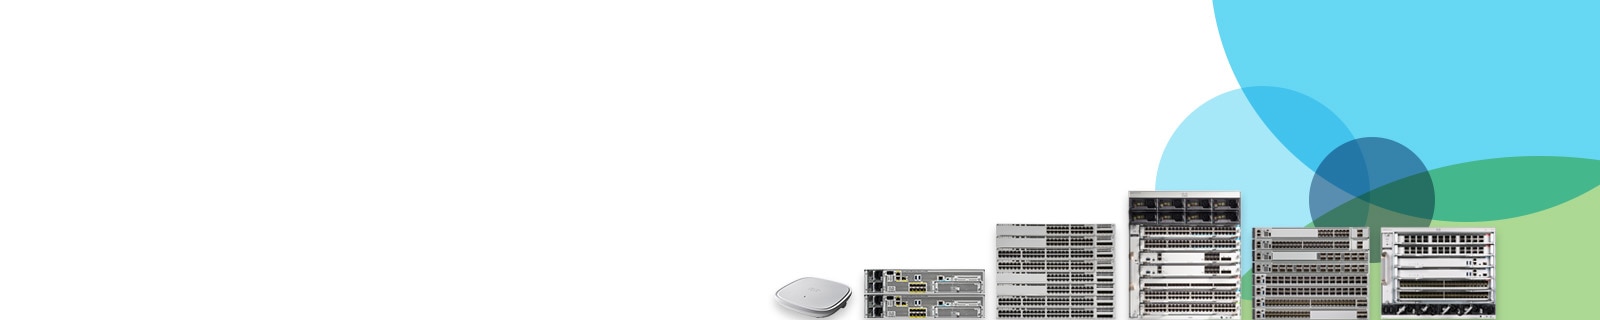 Cisco Catalyst 9000 reeks wireless controllers en switches